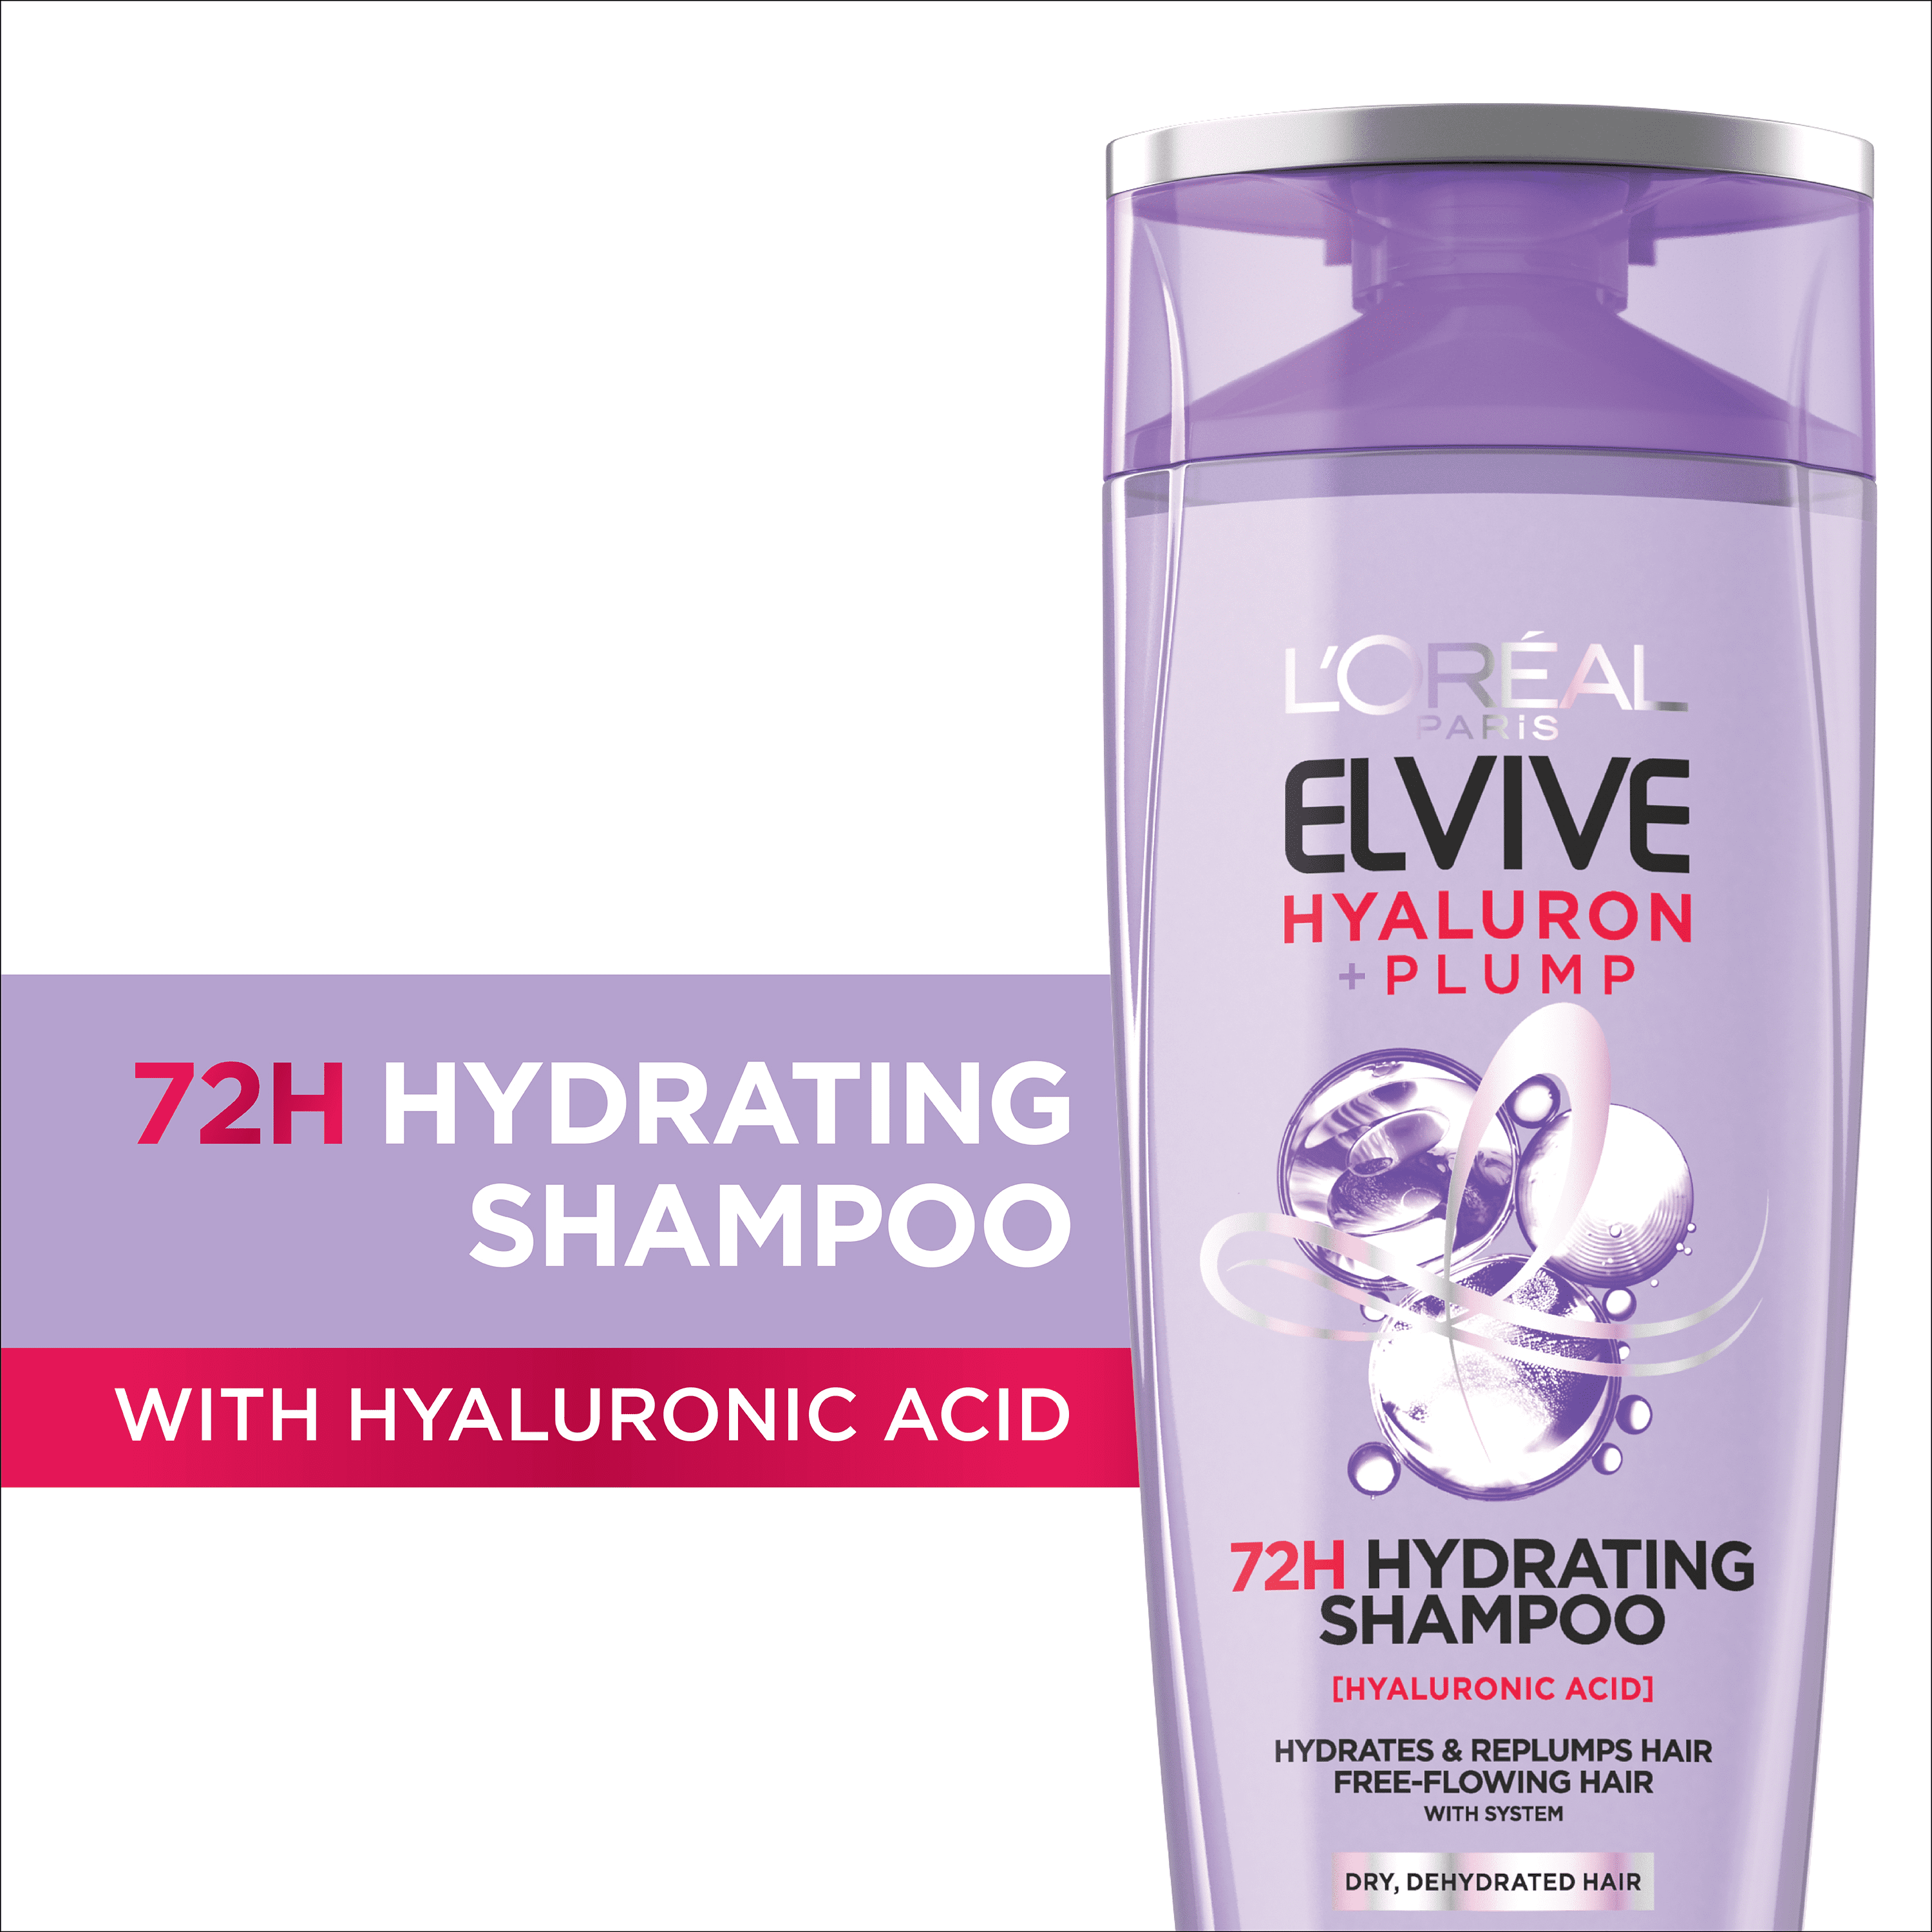 travel size elvive shampoo